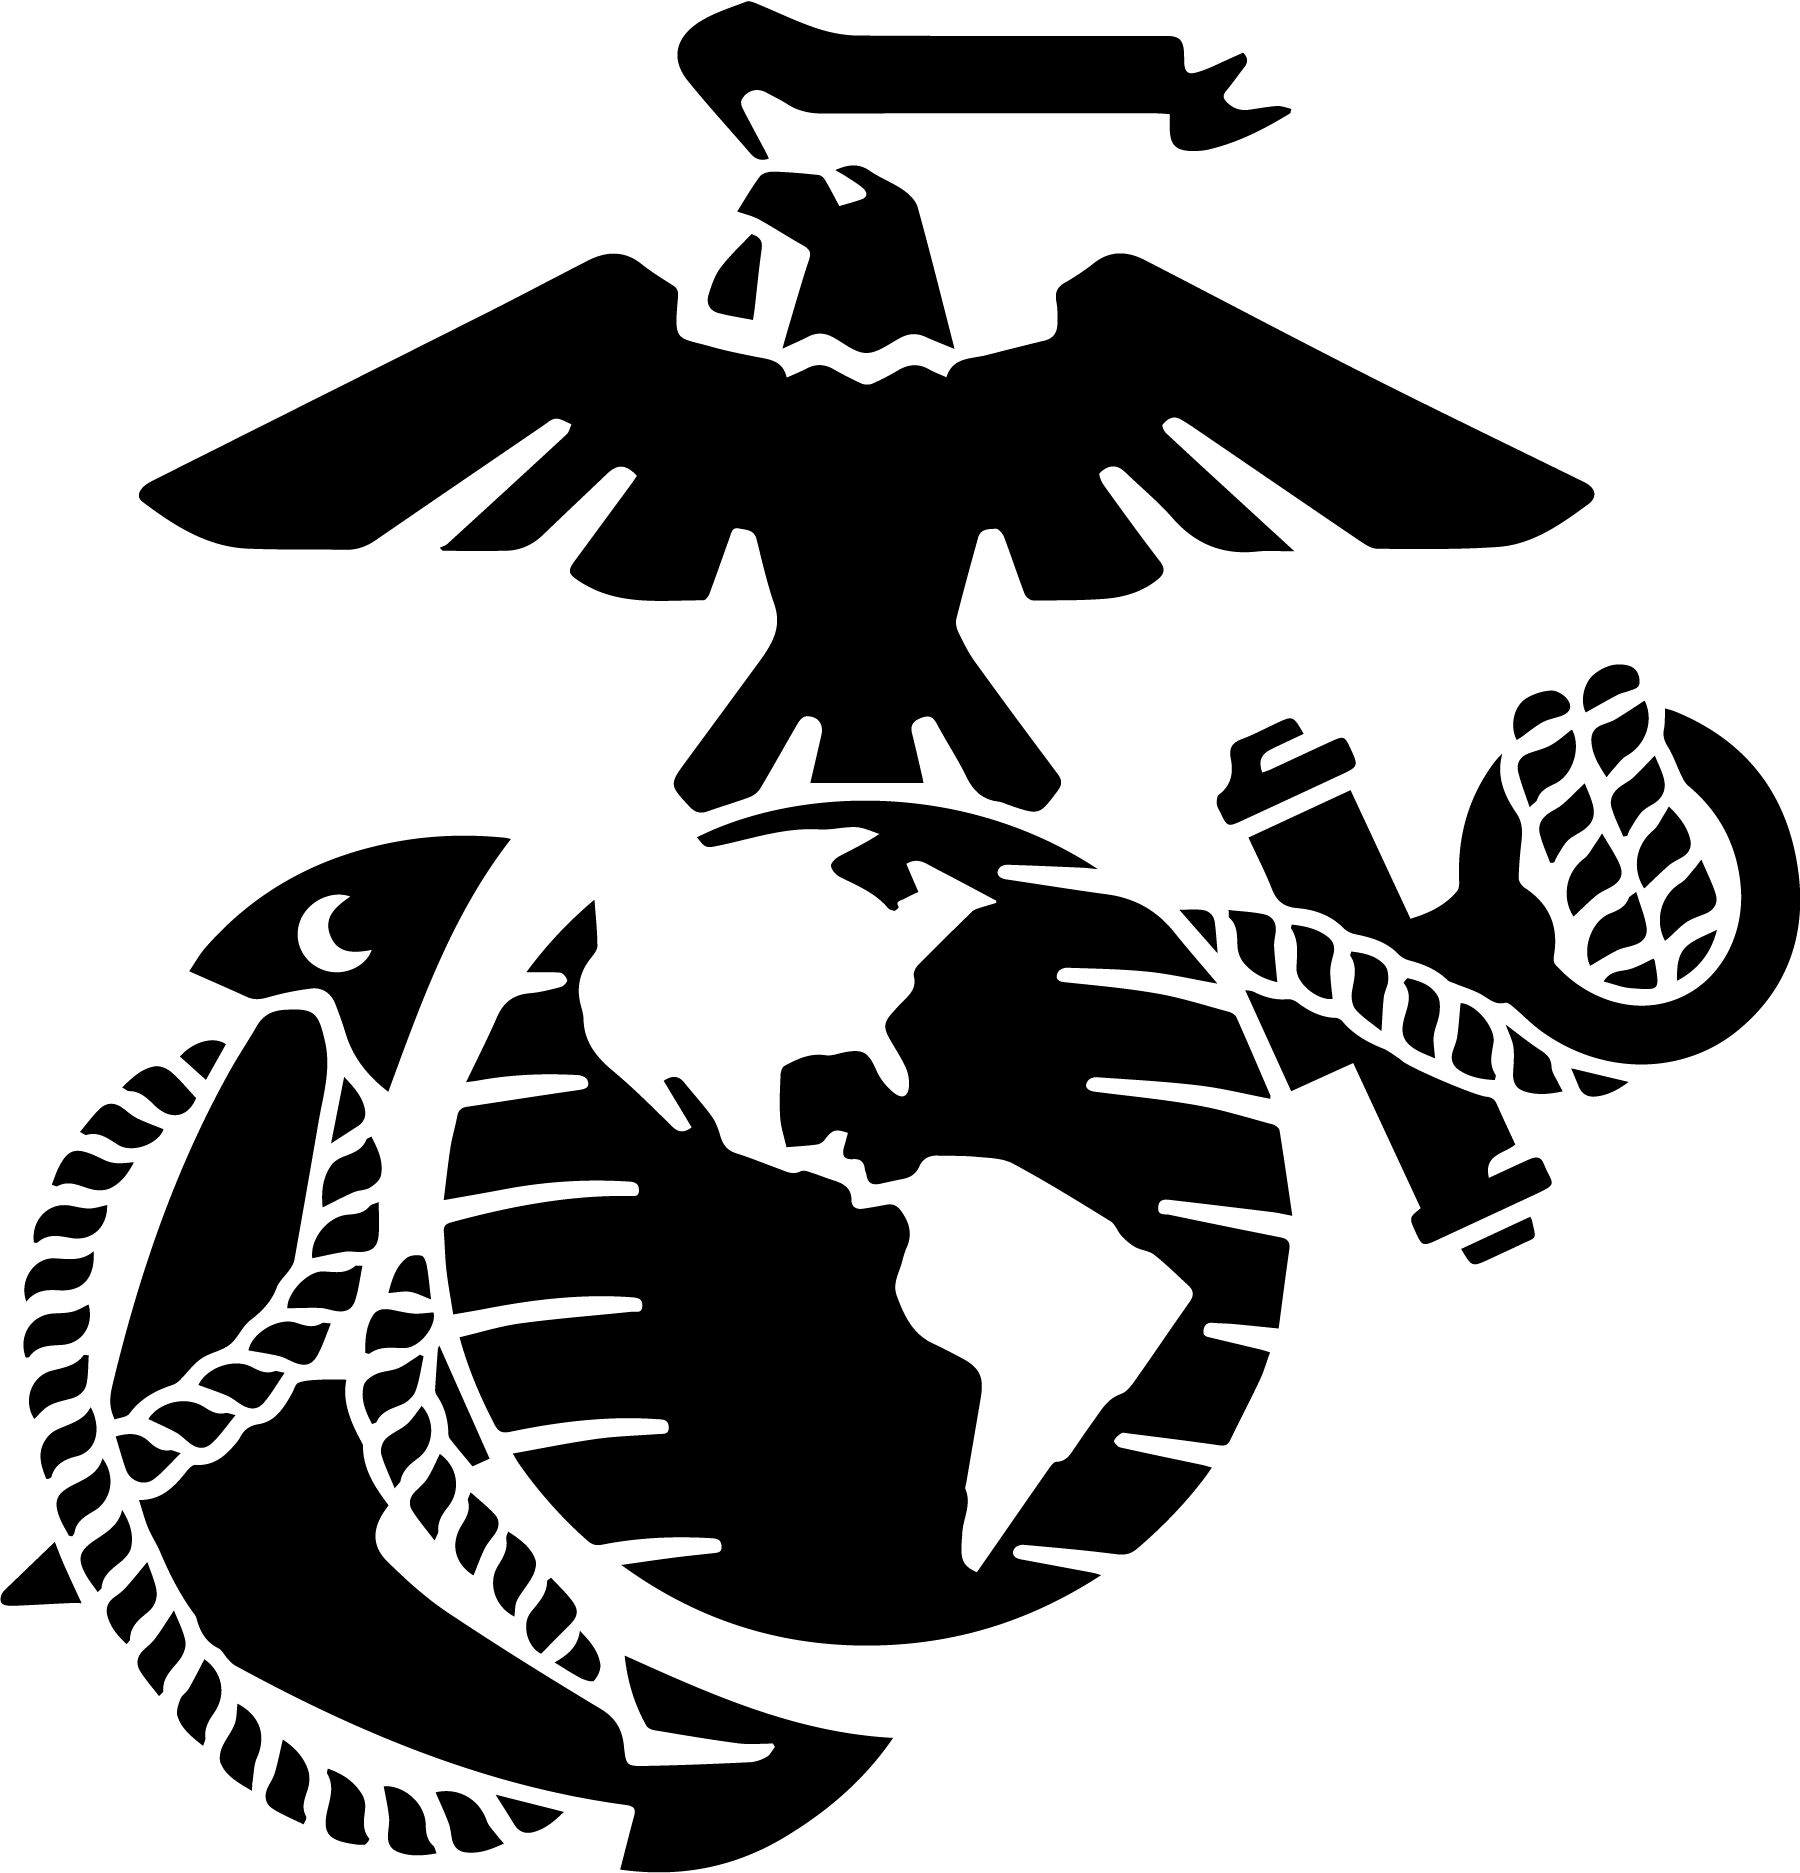 Military Marines Logo - Military Logos Vector - Army, Navy, Air Force, Marines, Coast Guard